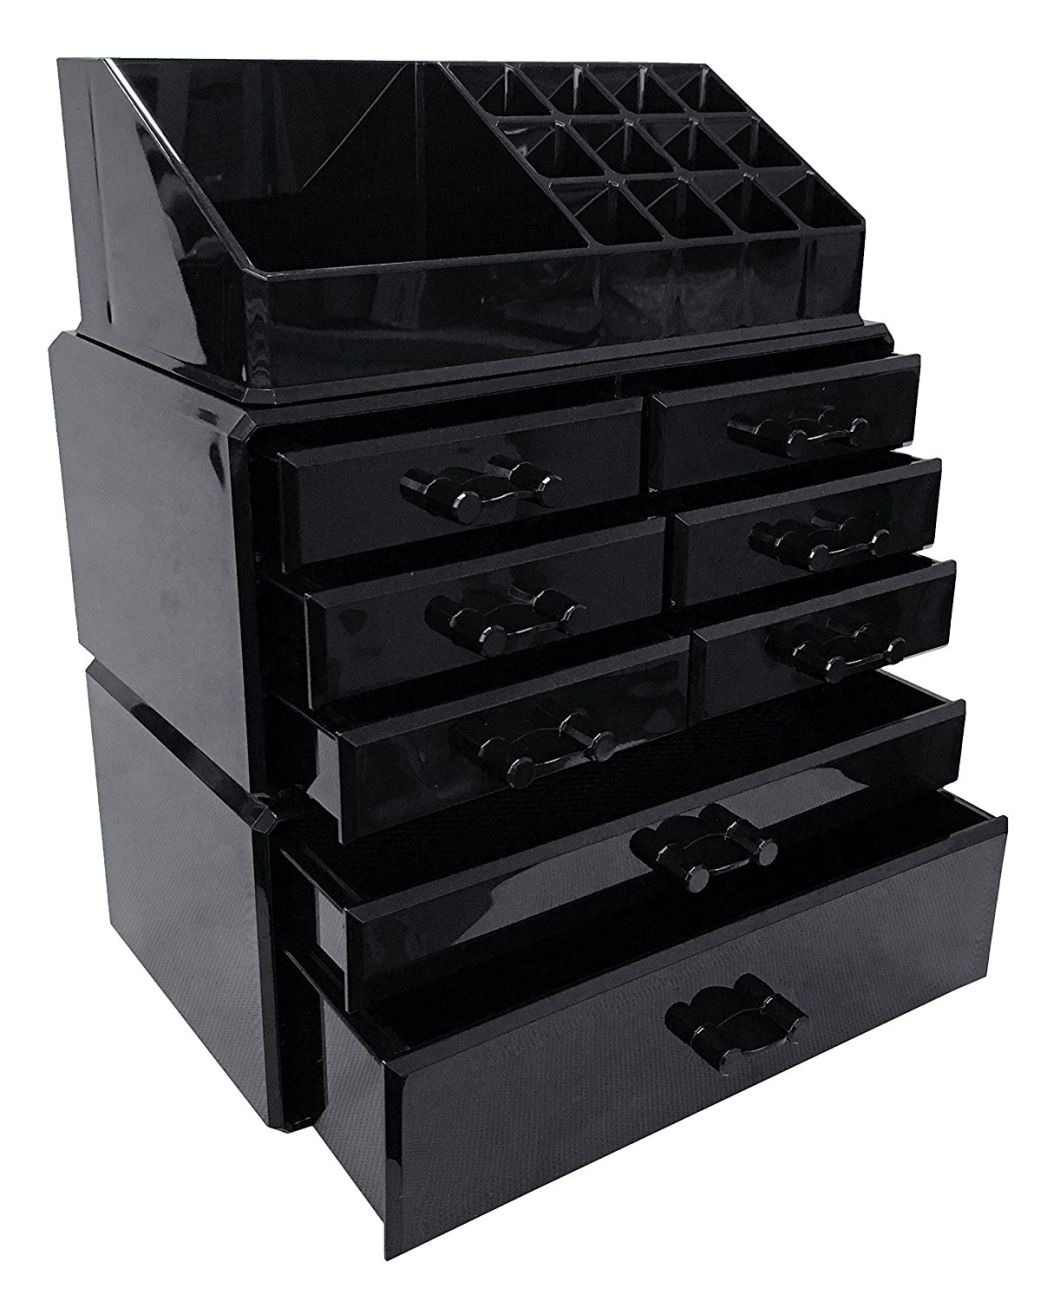 Black Acrylic Makeup Cosmetic Organizer Storage Drawers Display Boxes Case